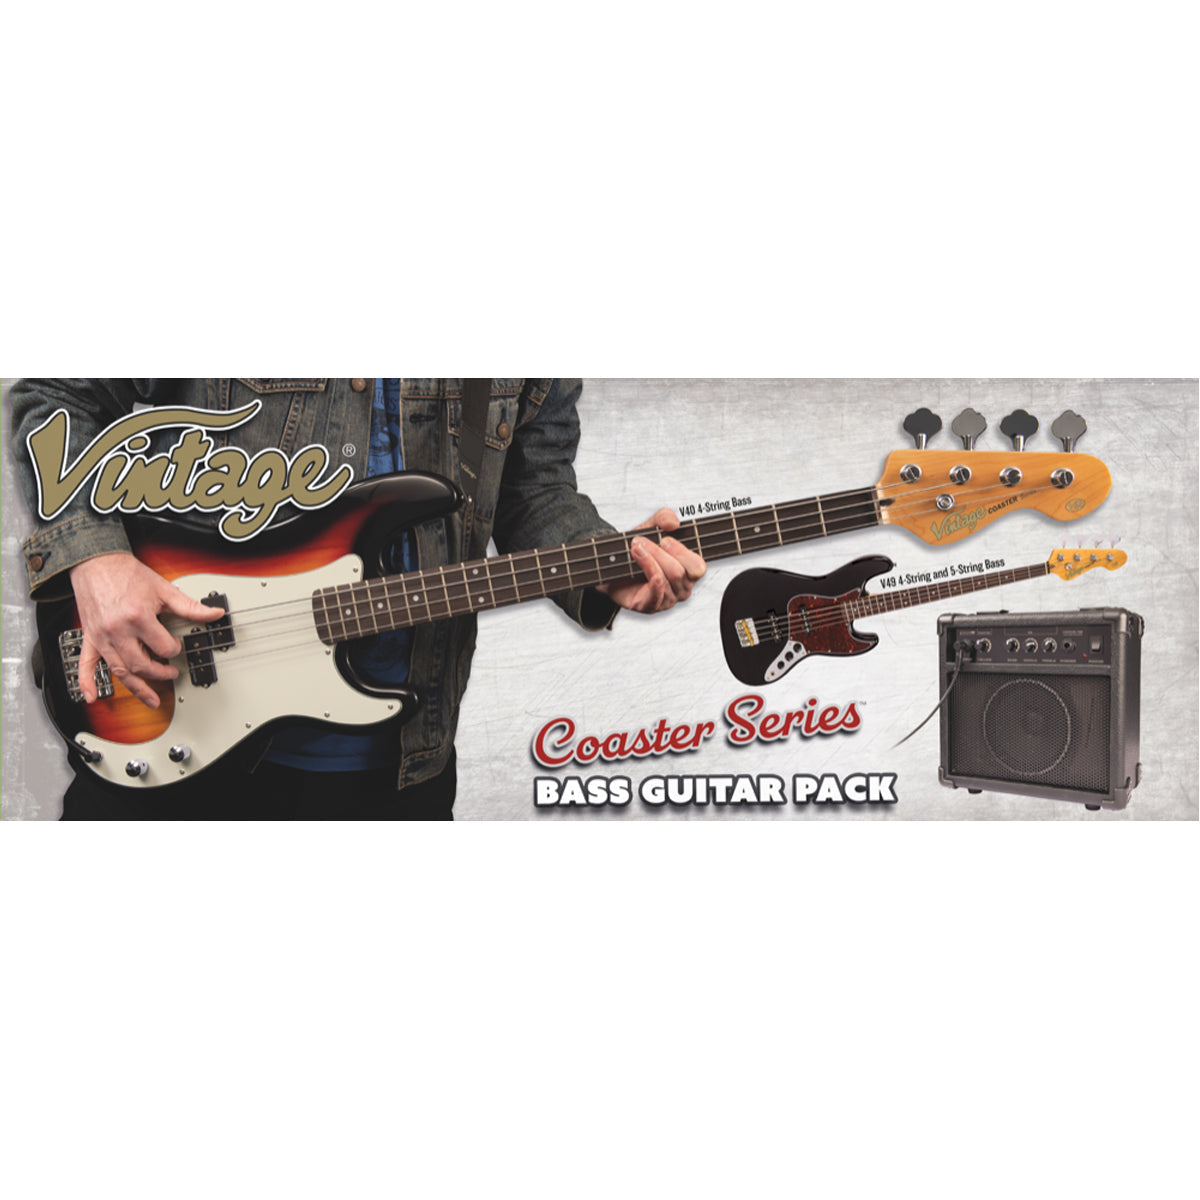 Vintage V49 Coaster Series Bass Guitar Pack ~ 3 Tone Sunburst, Bass Guitar Packs for sale at Richards Guitars.